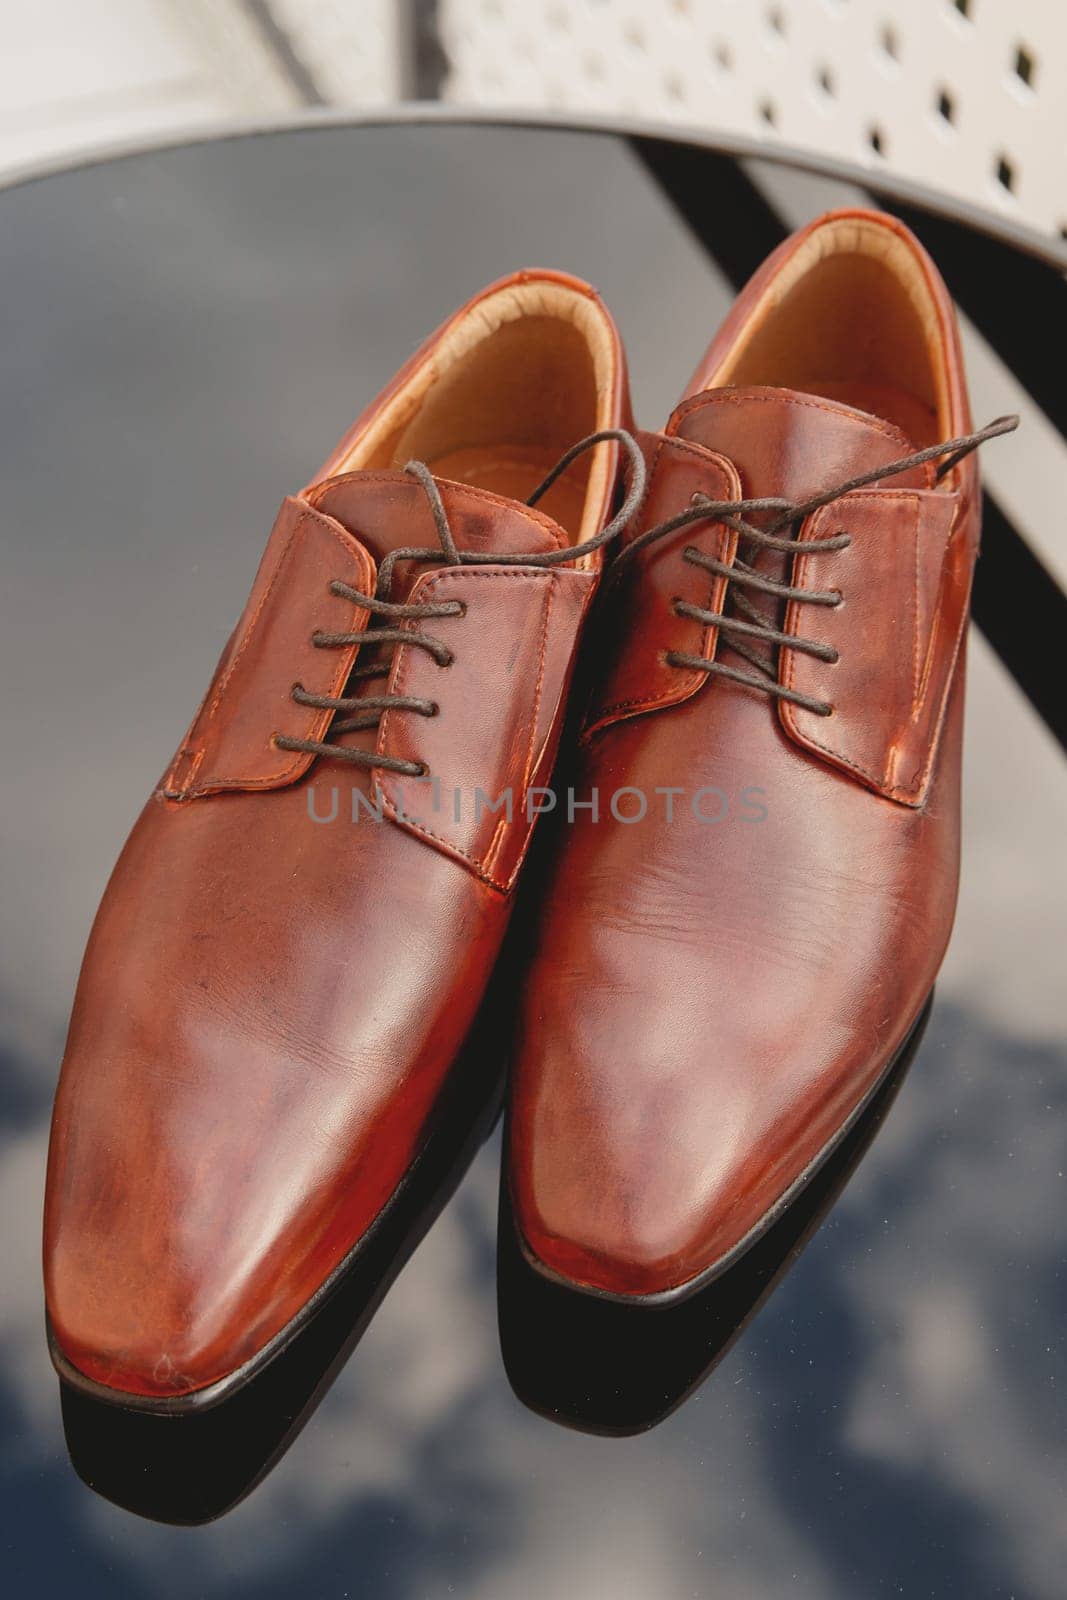 Men's shoes, groom's wedding shoes. Set groom accessories. Soft focus. by leonik